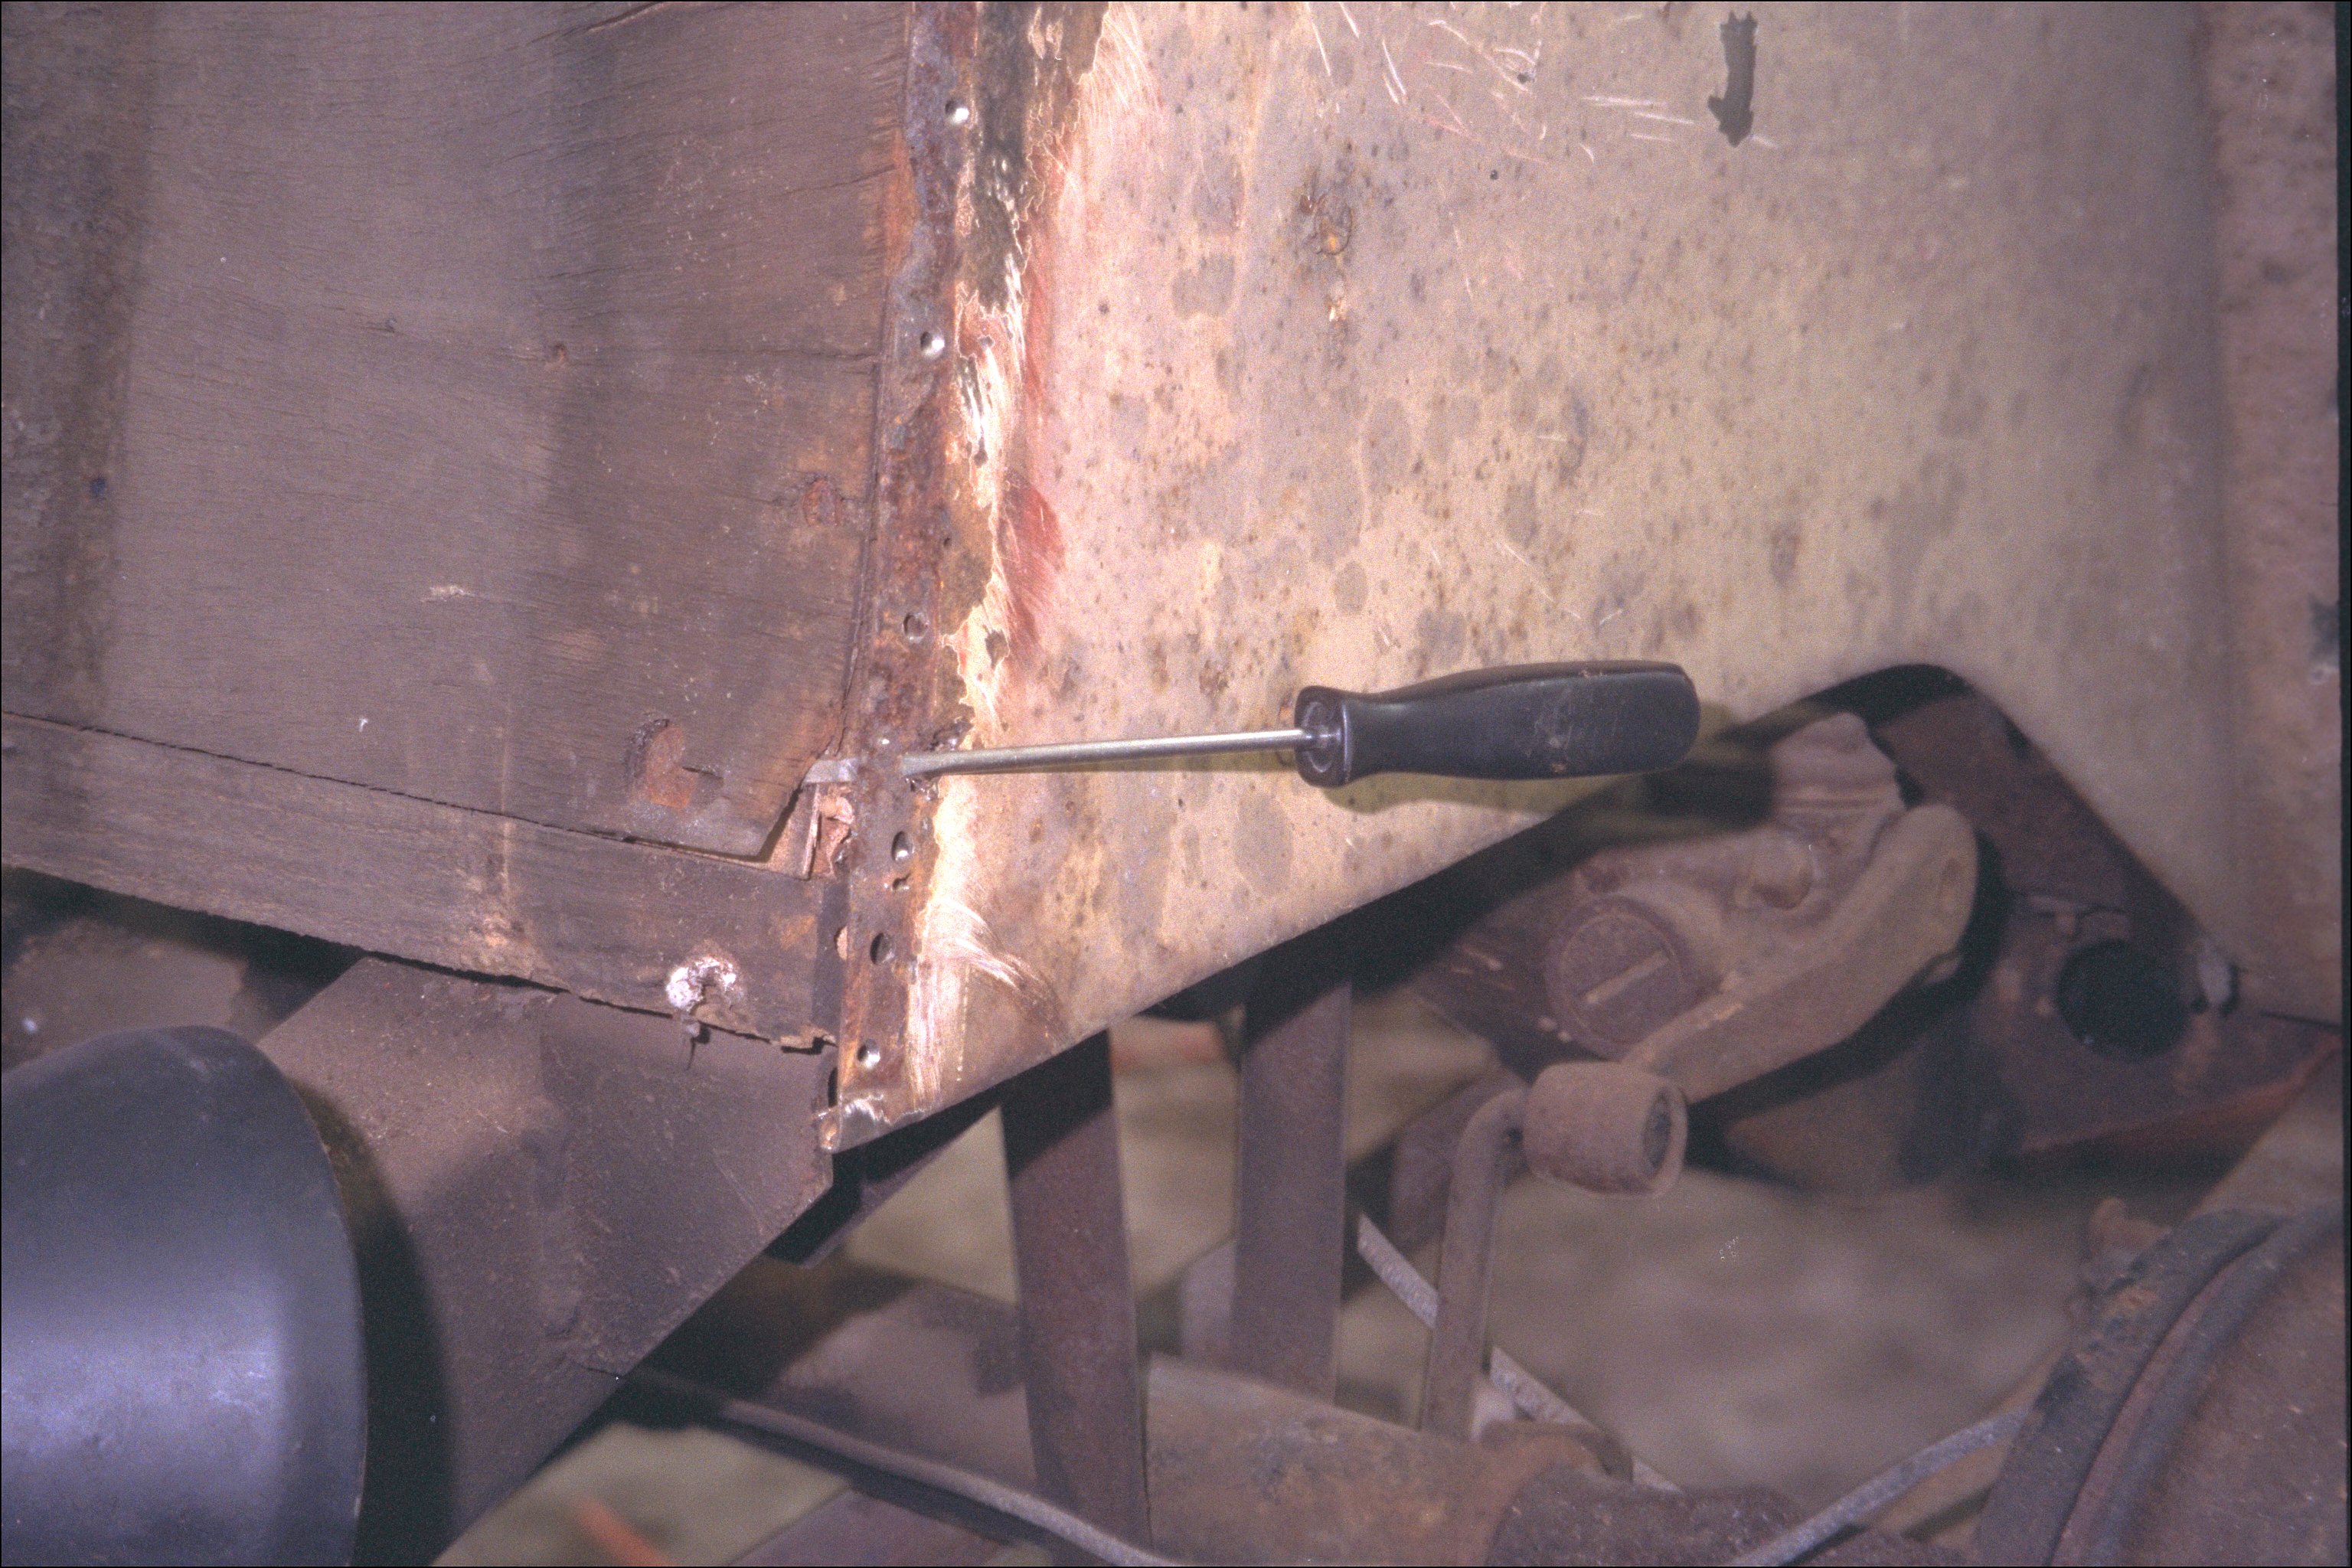 Plywood de-lamination at boot rear & wheel well